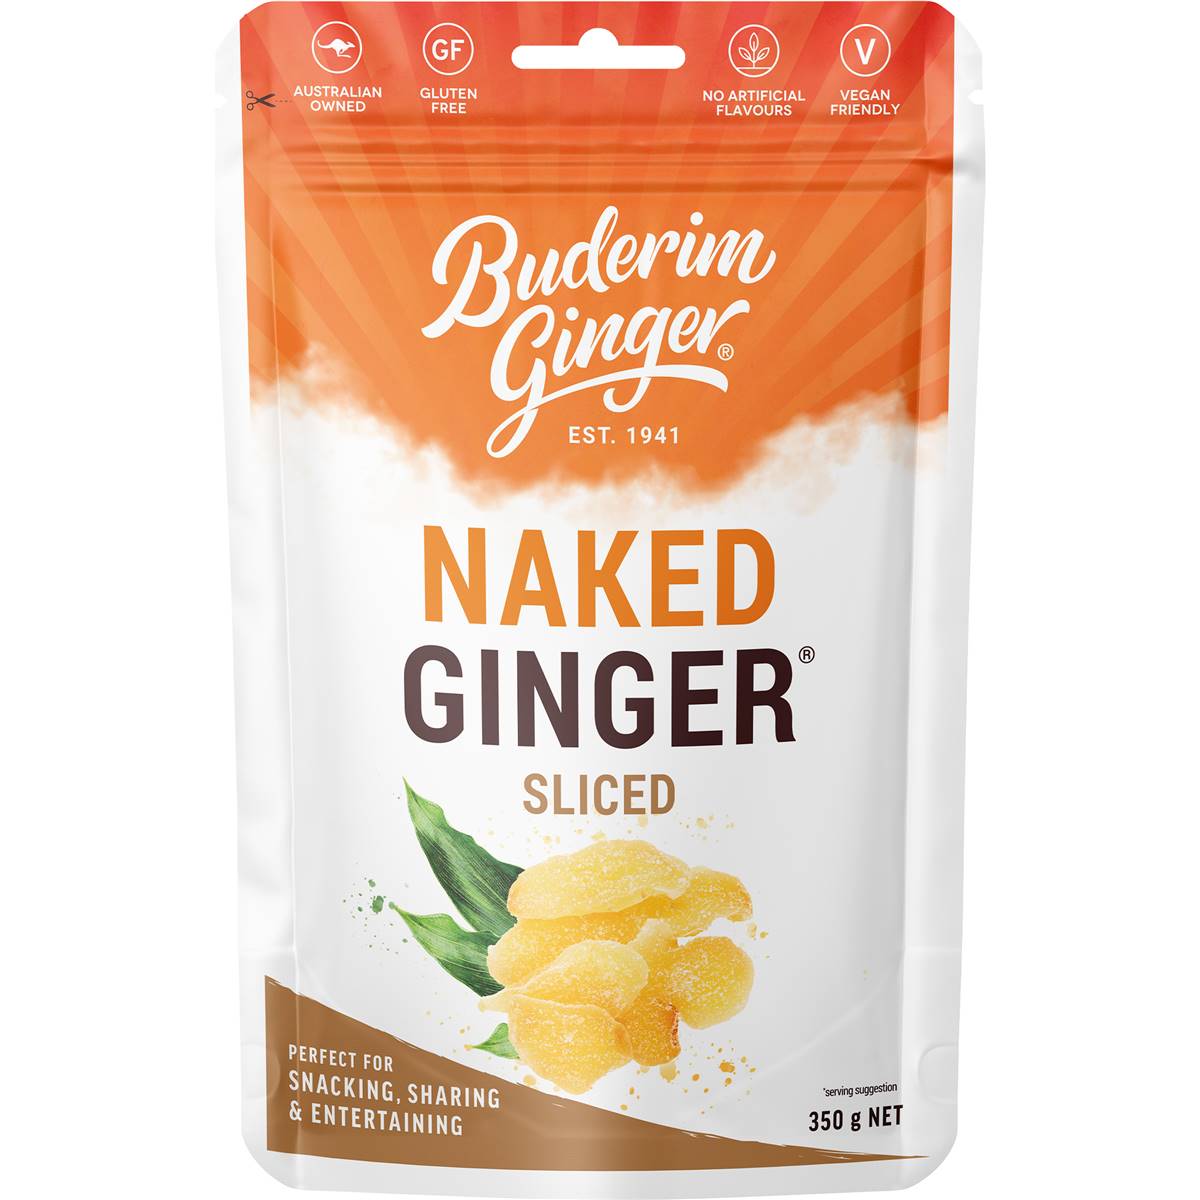 Calories in Buderim Ginger Ginger Sliced Naked Ginger